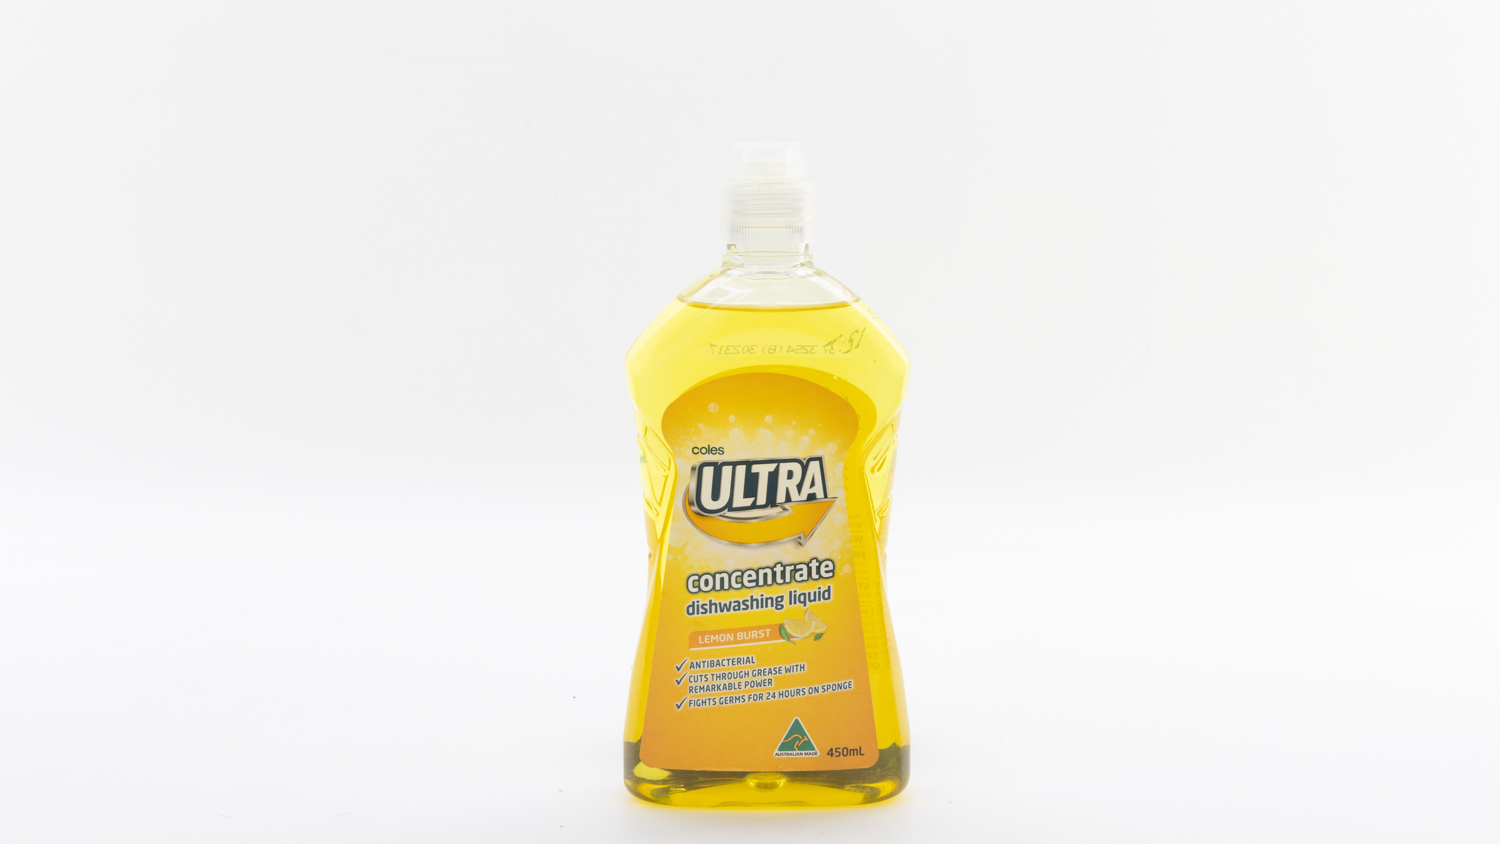 Coles Ultra Concentrate Dishwashing Liquid Lemon Burst carousel image